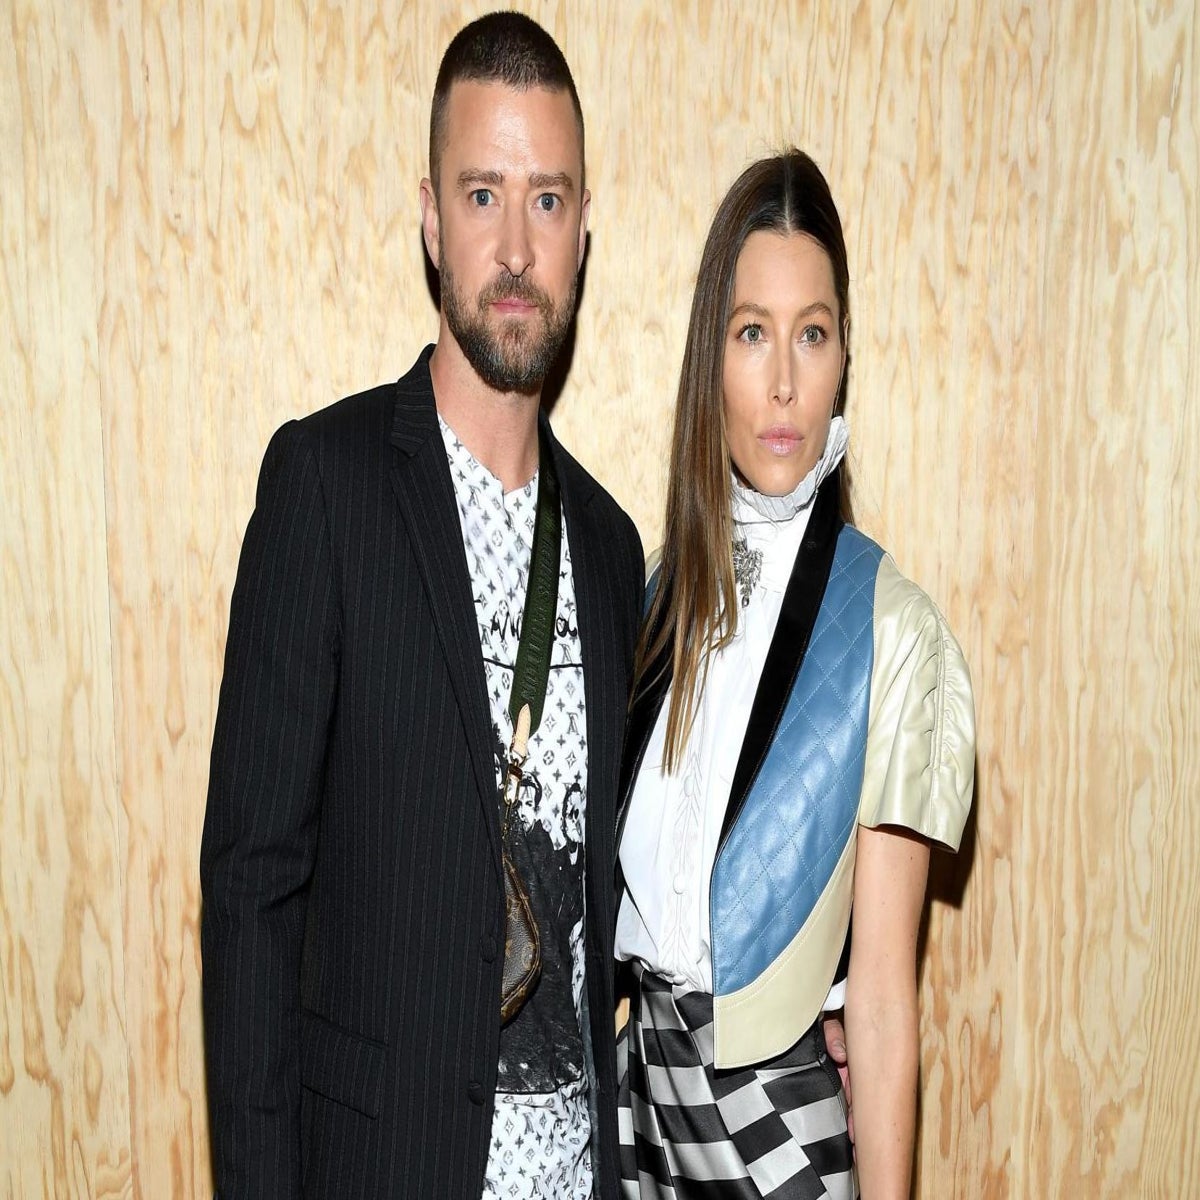 Jessica Biel Talks Pandemic Parenting with Justin Timberlake